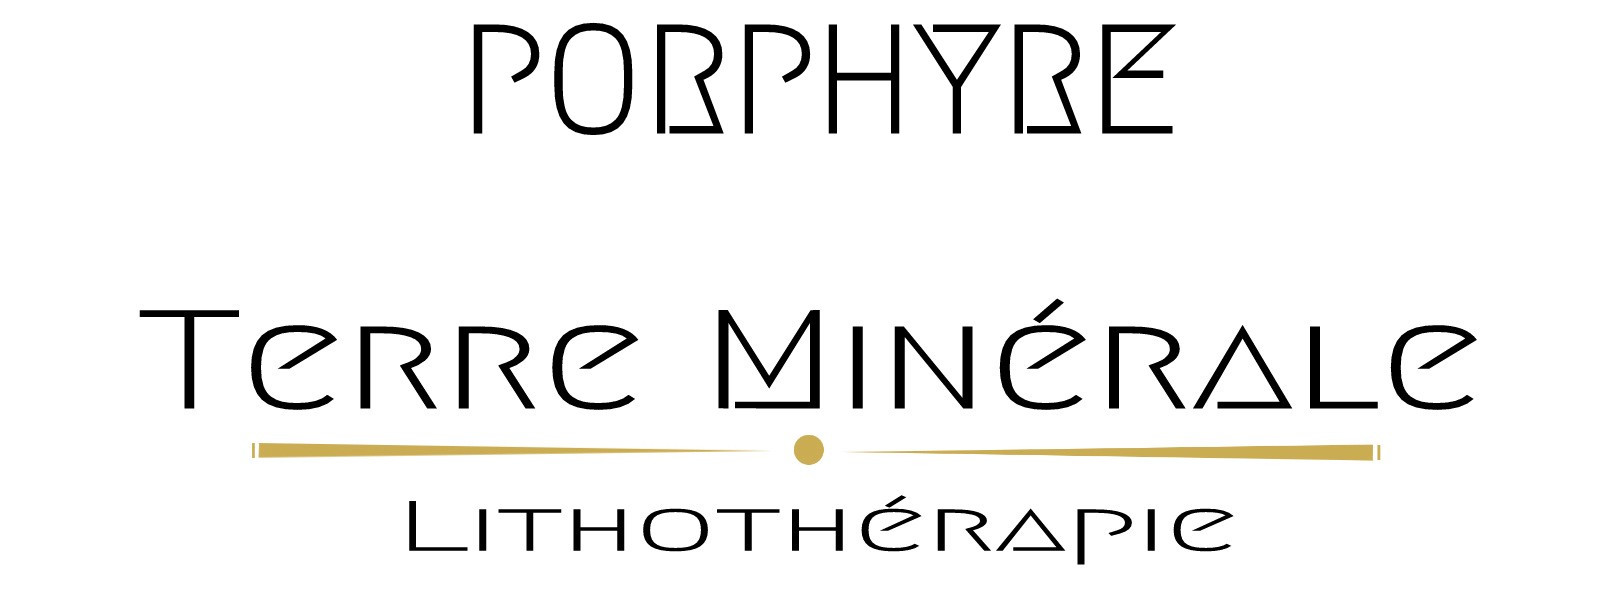 PORPHYRE